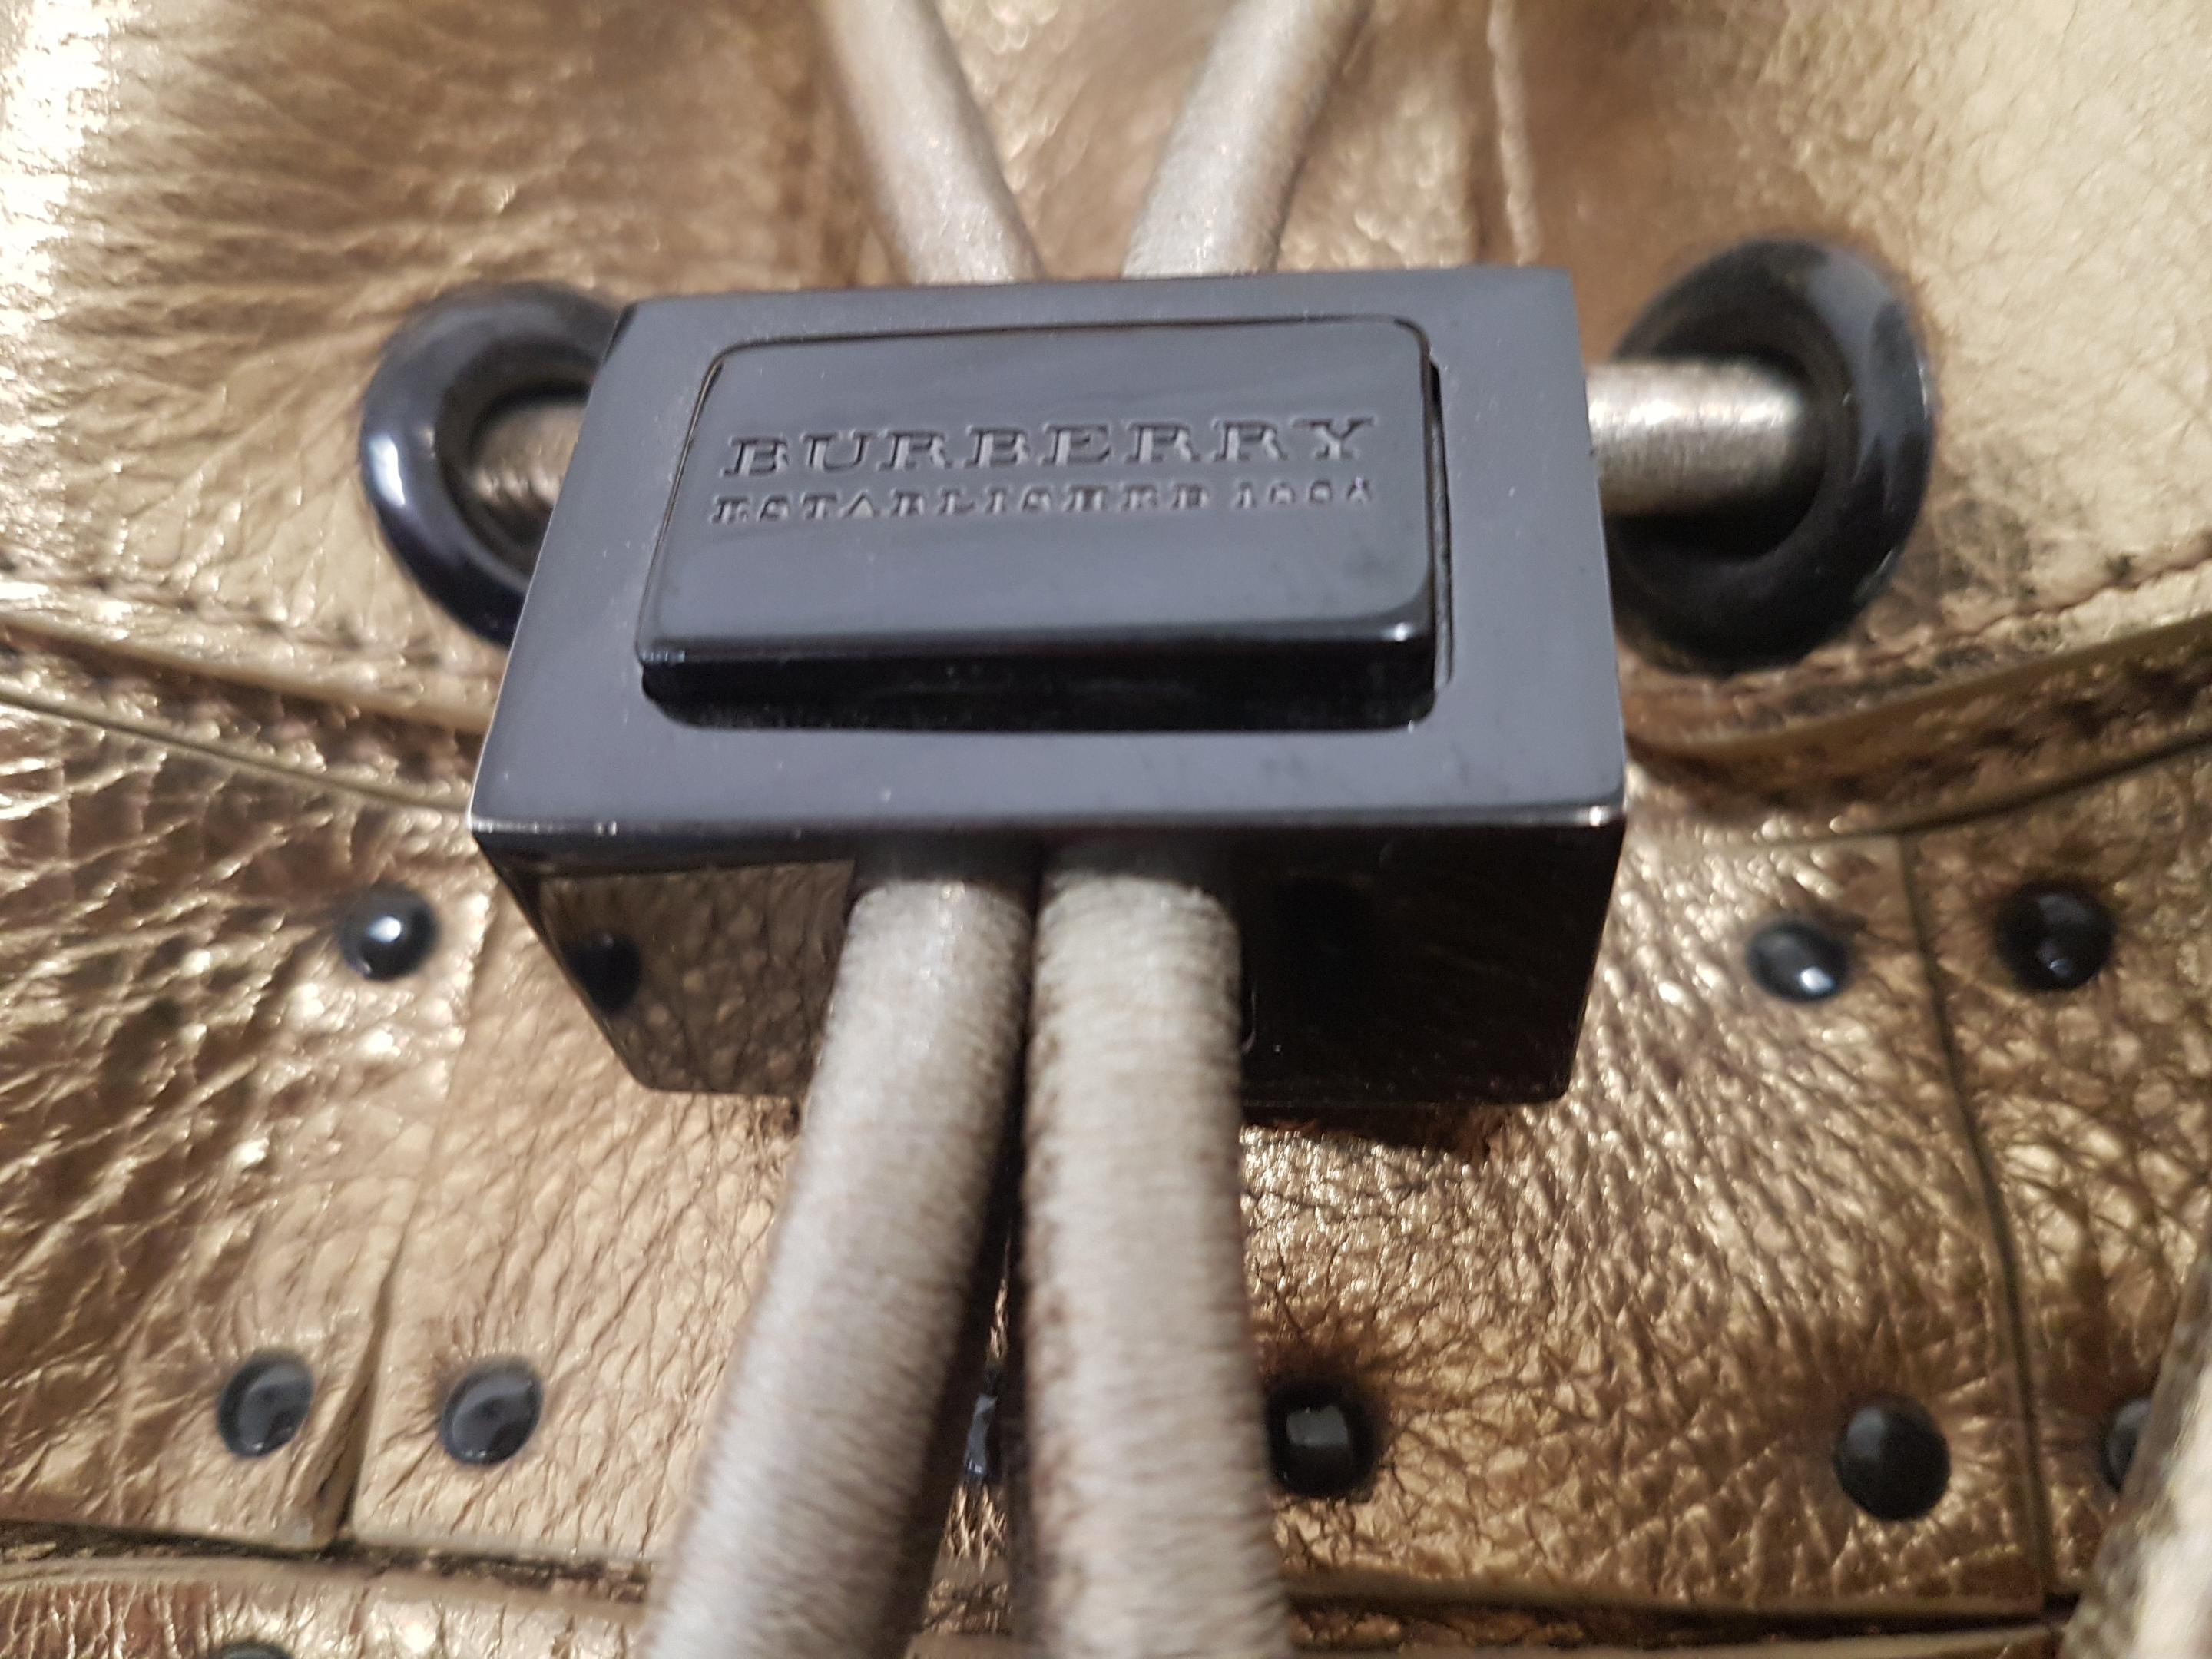 Beautiful Burberry Leather Bag with Straps. Detachable Shoulder Straps
Color: Golden Bronze